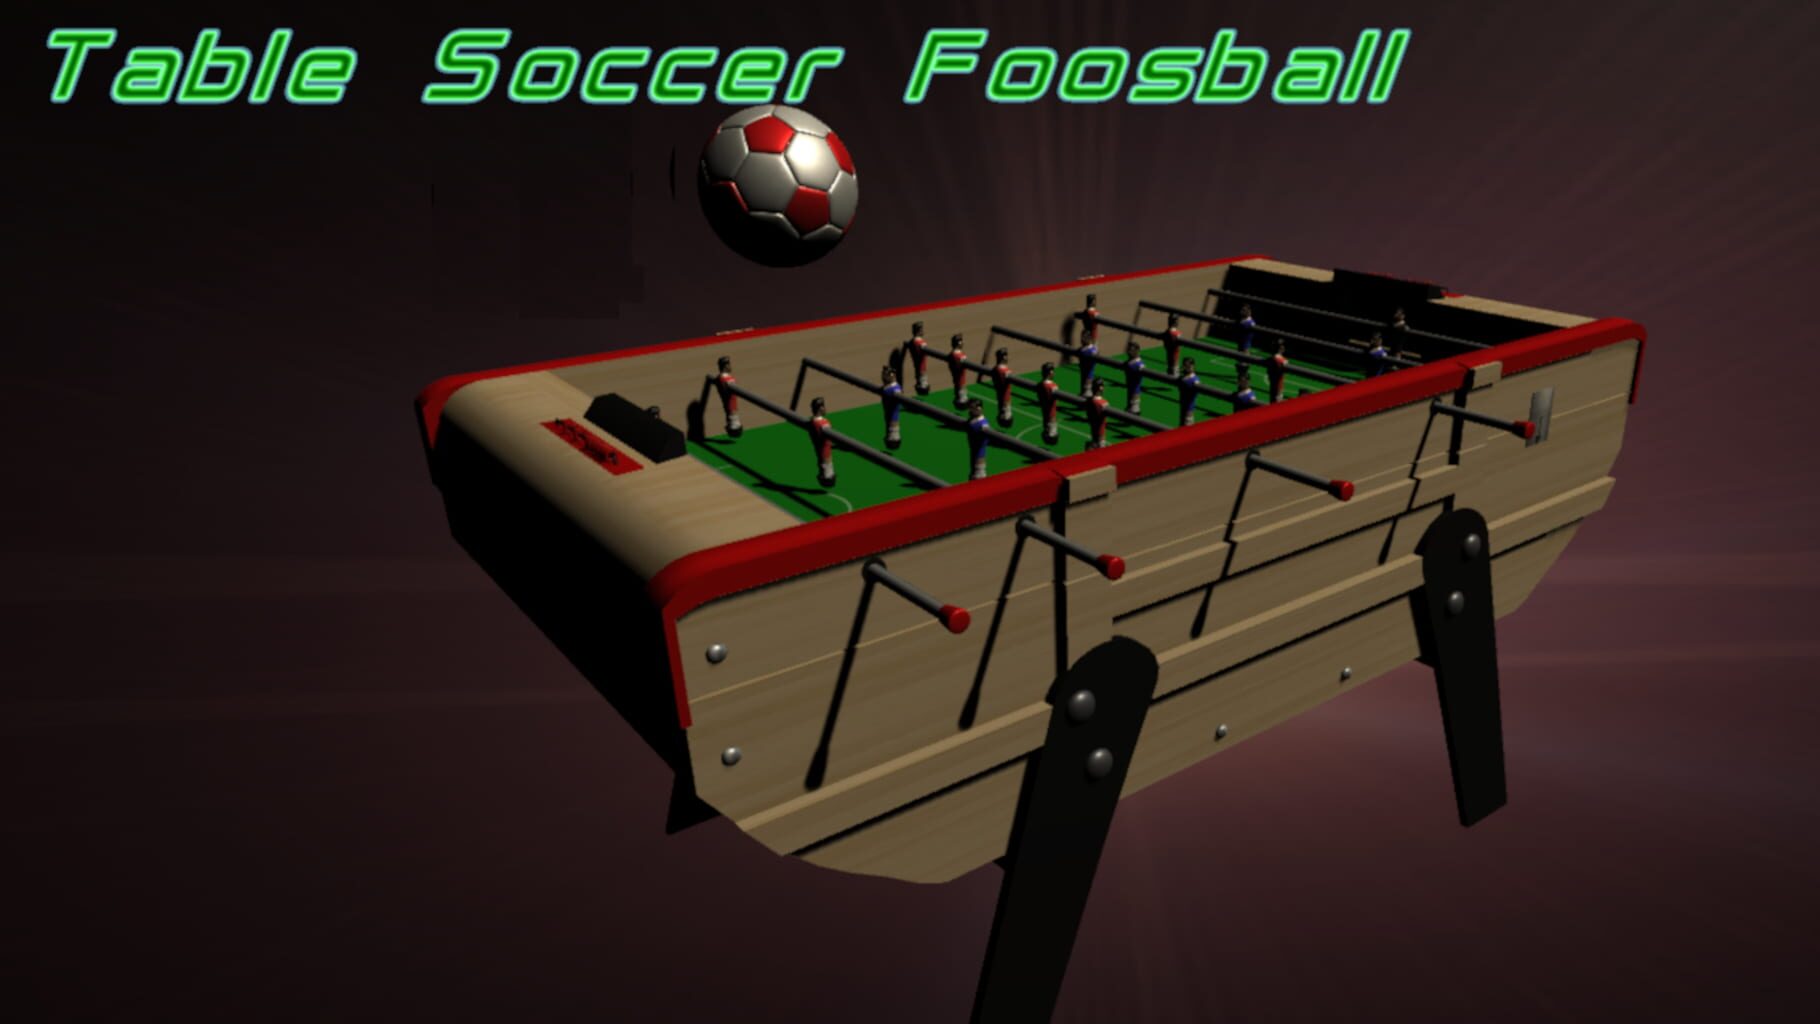 Table Soccer Foosball artwork